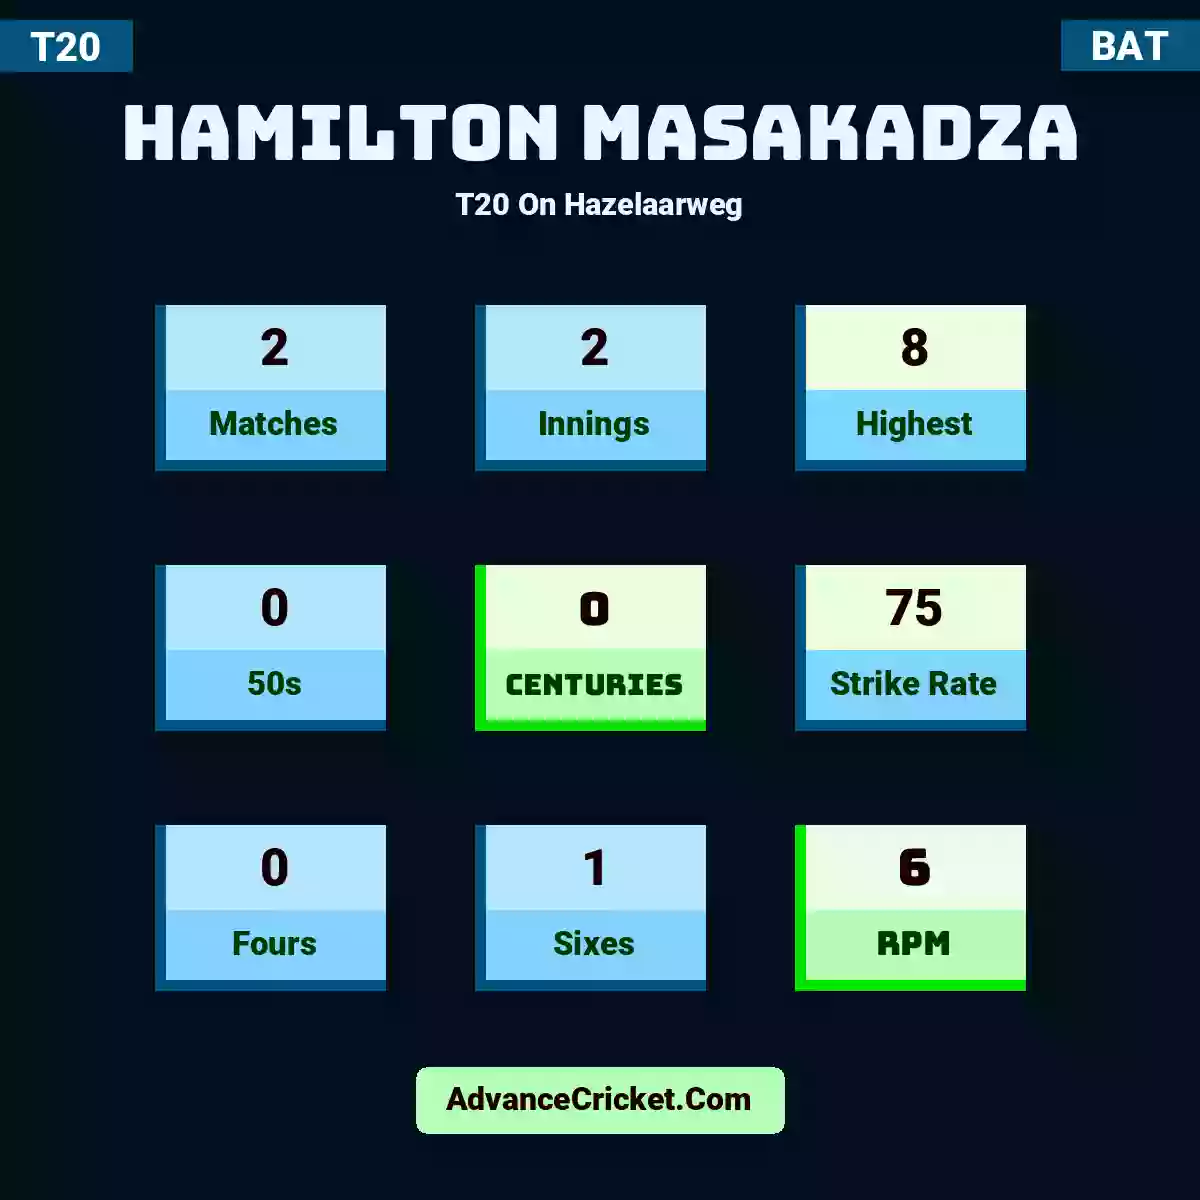 Hamilton Masakadza T20  On Hazelaarweg, Hamilton Masakadza played 2 matches, scored 8 runs as highest, 0 half-centuries, and 0 centuries, with a strike rate of 75. H.Masakadza hit 0 fours and 1 sixes, with an RPM of 6.